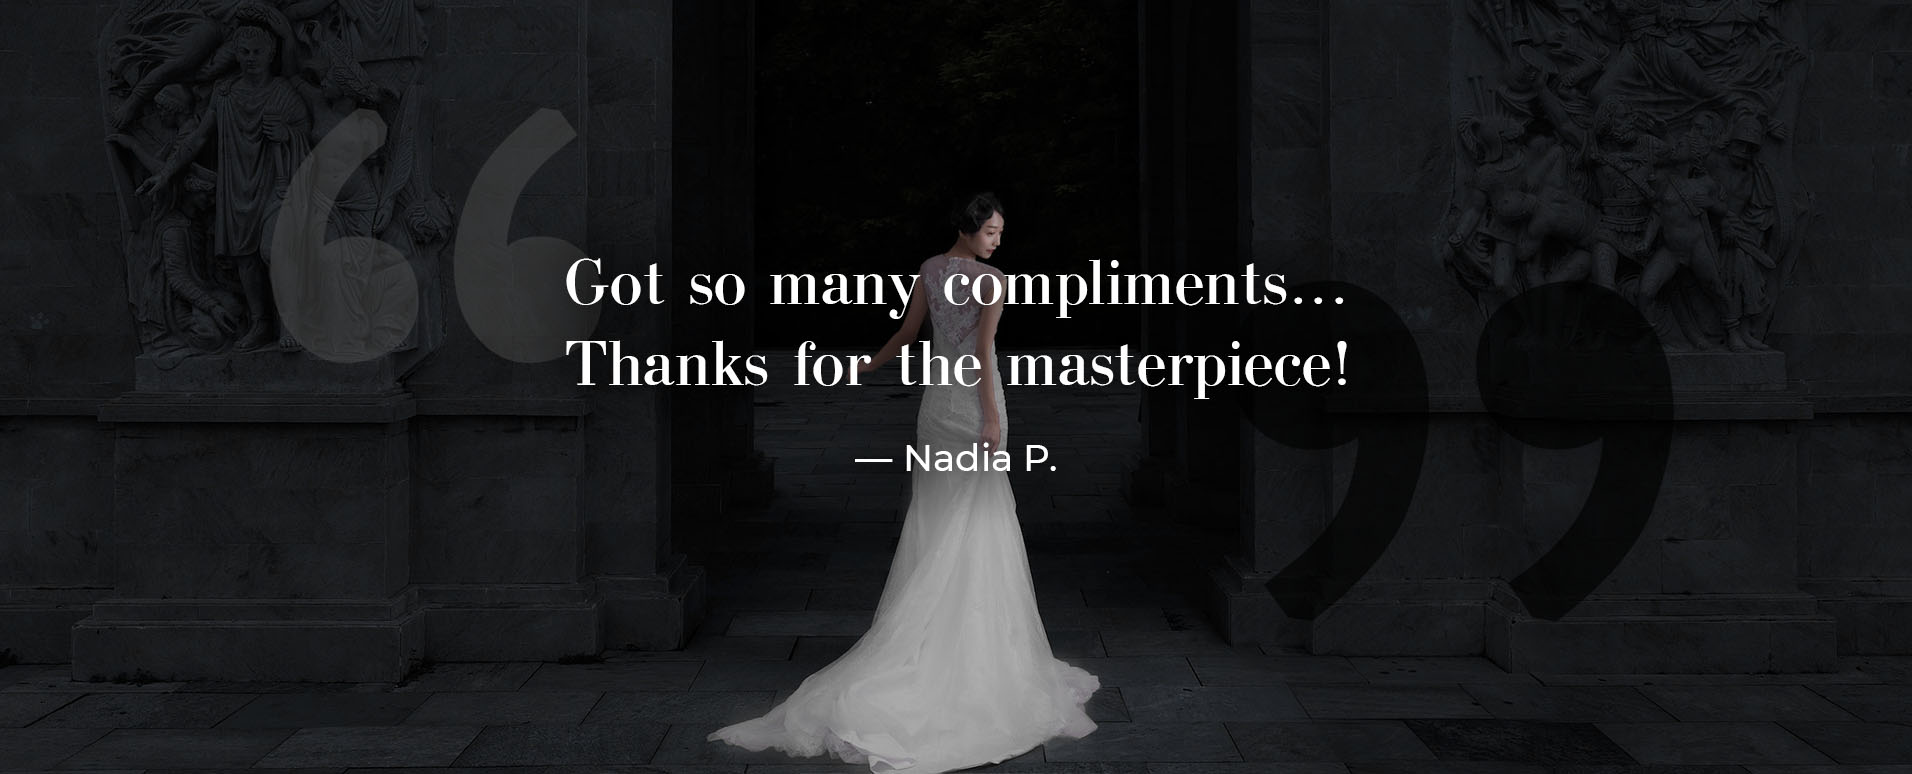 Nadia.jpg